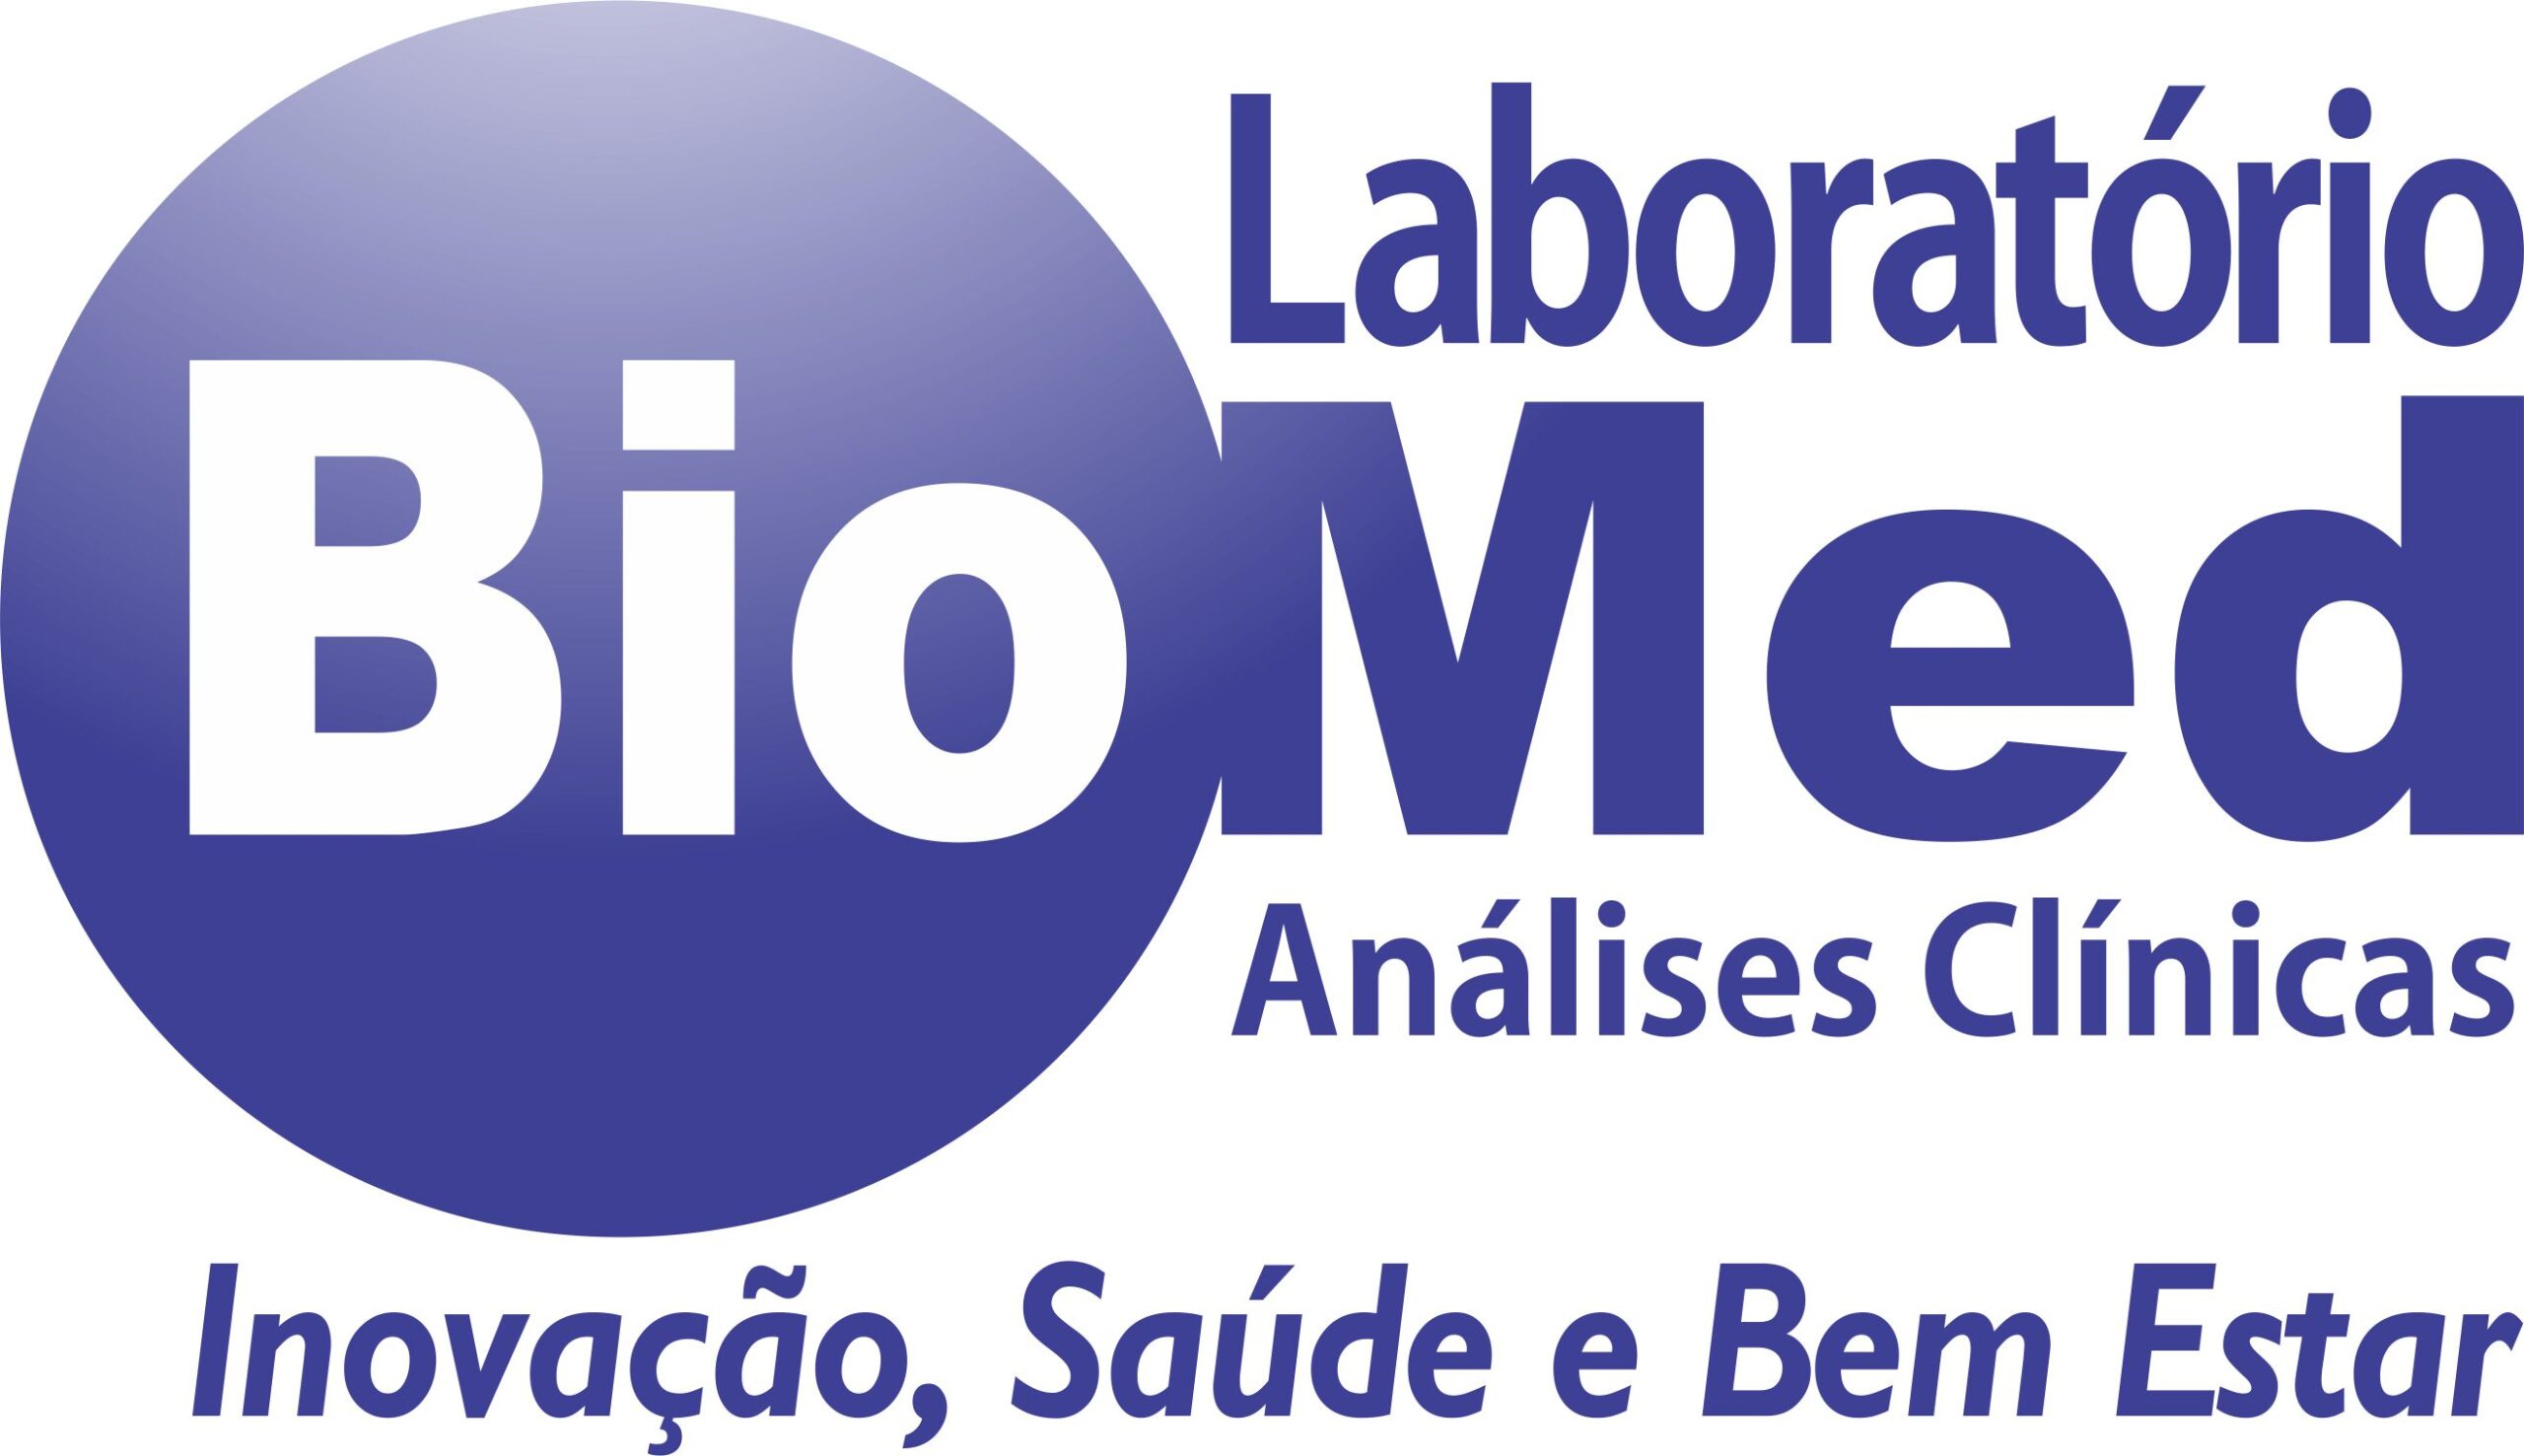 Biomed Logo scaled